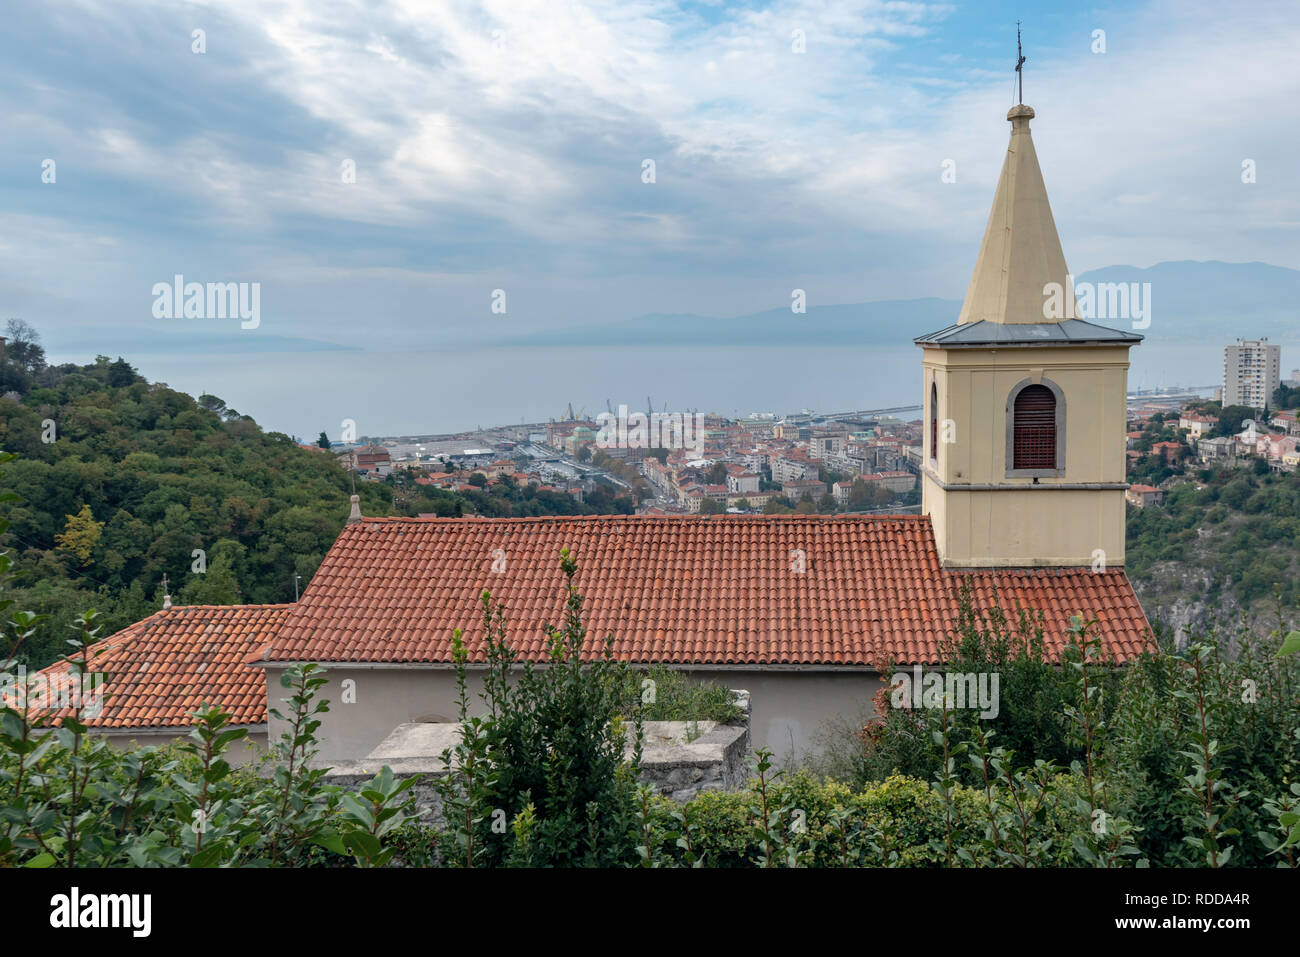 Our Lady of Trsat's Sanctuary from Trsat Castle, Rijeka, Croatia Stock Photo